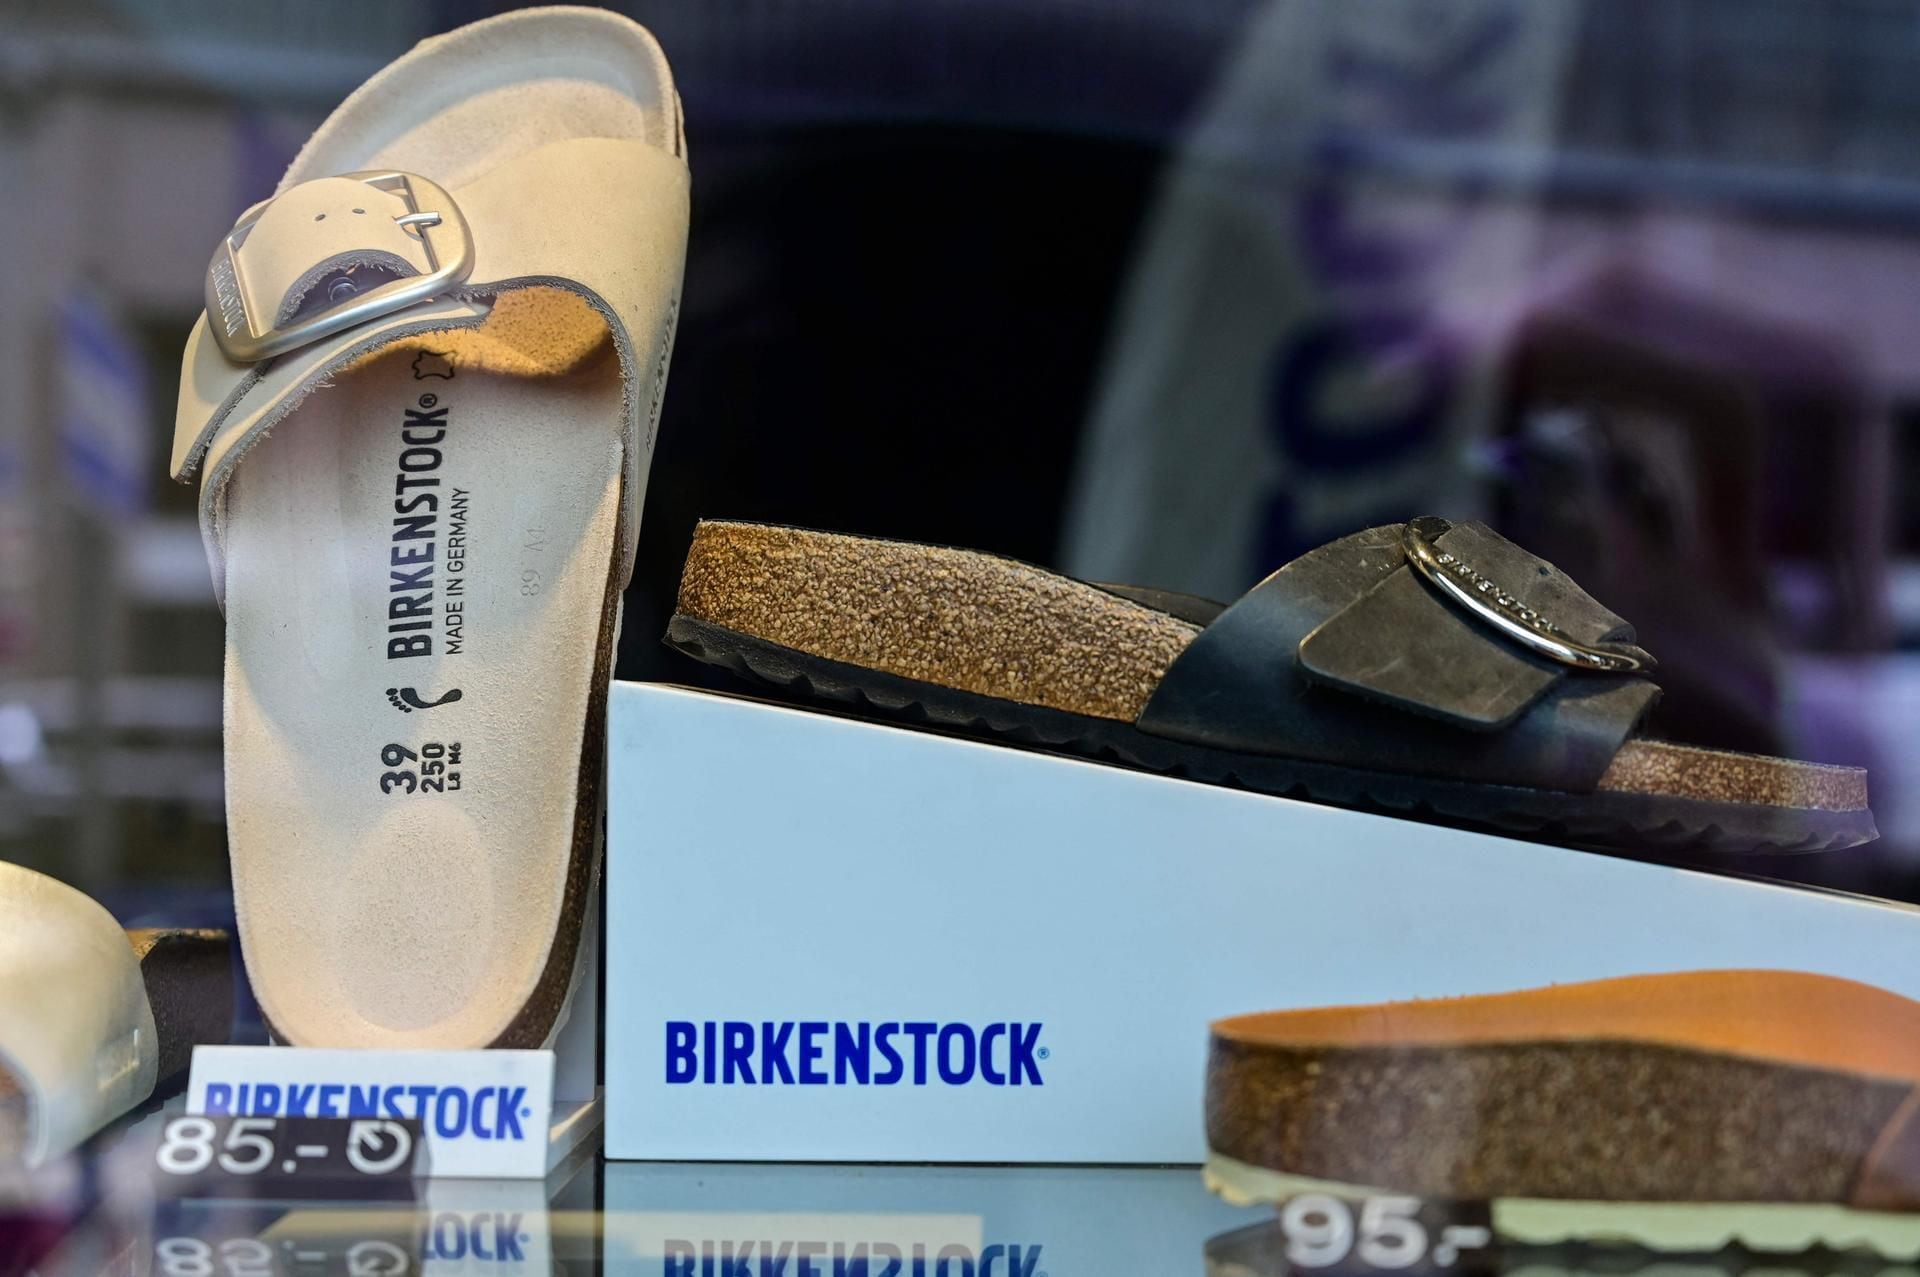 Bernard Arnault & Birkenstock: LVMH chairman's stake in company 